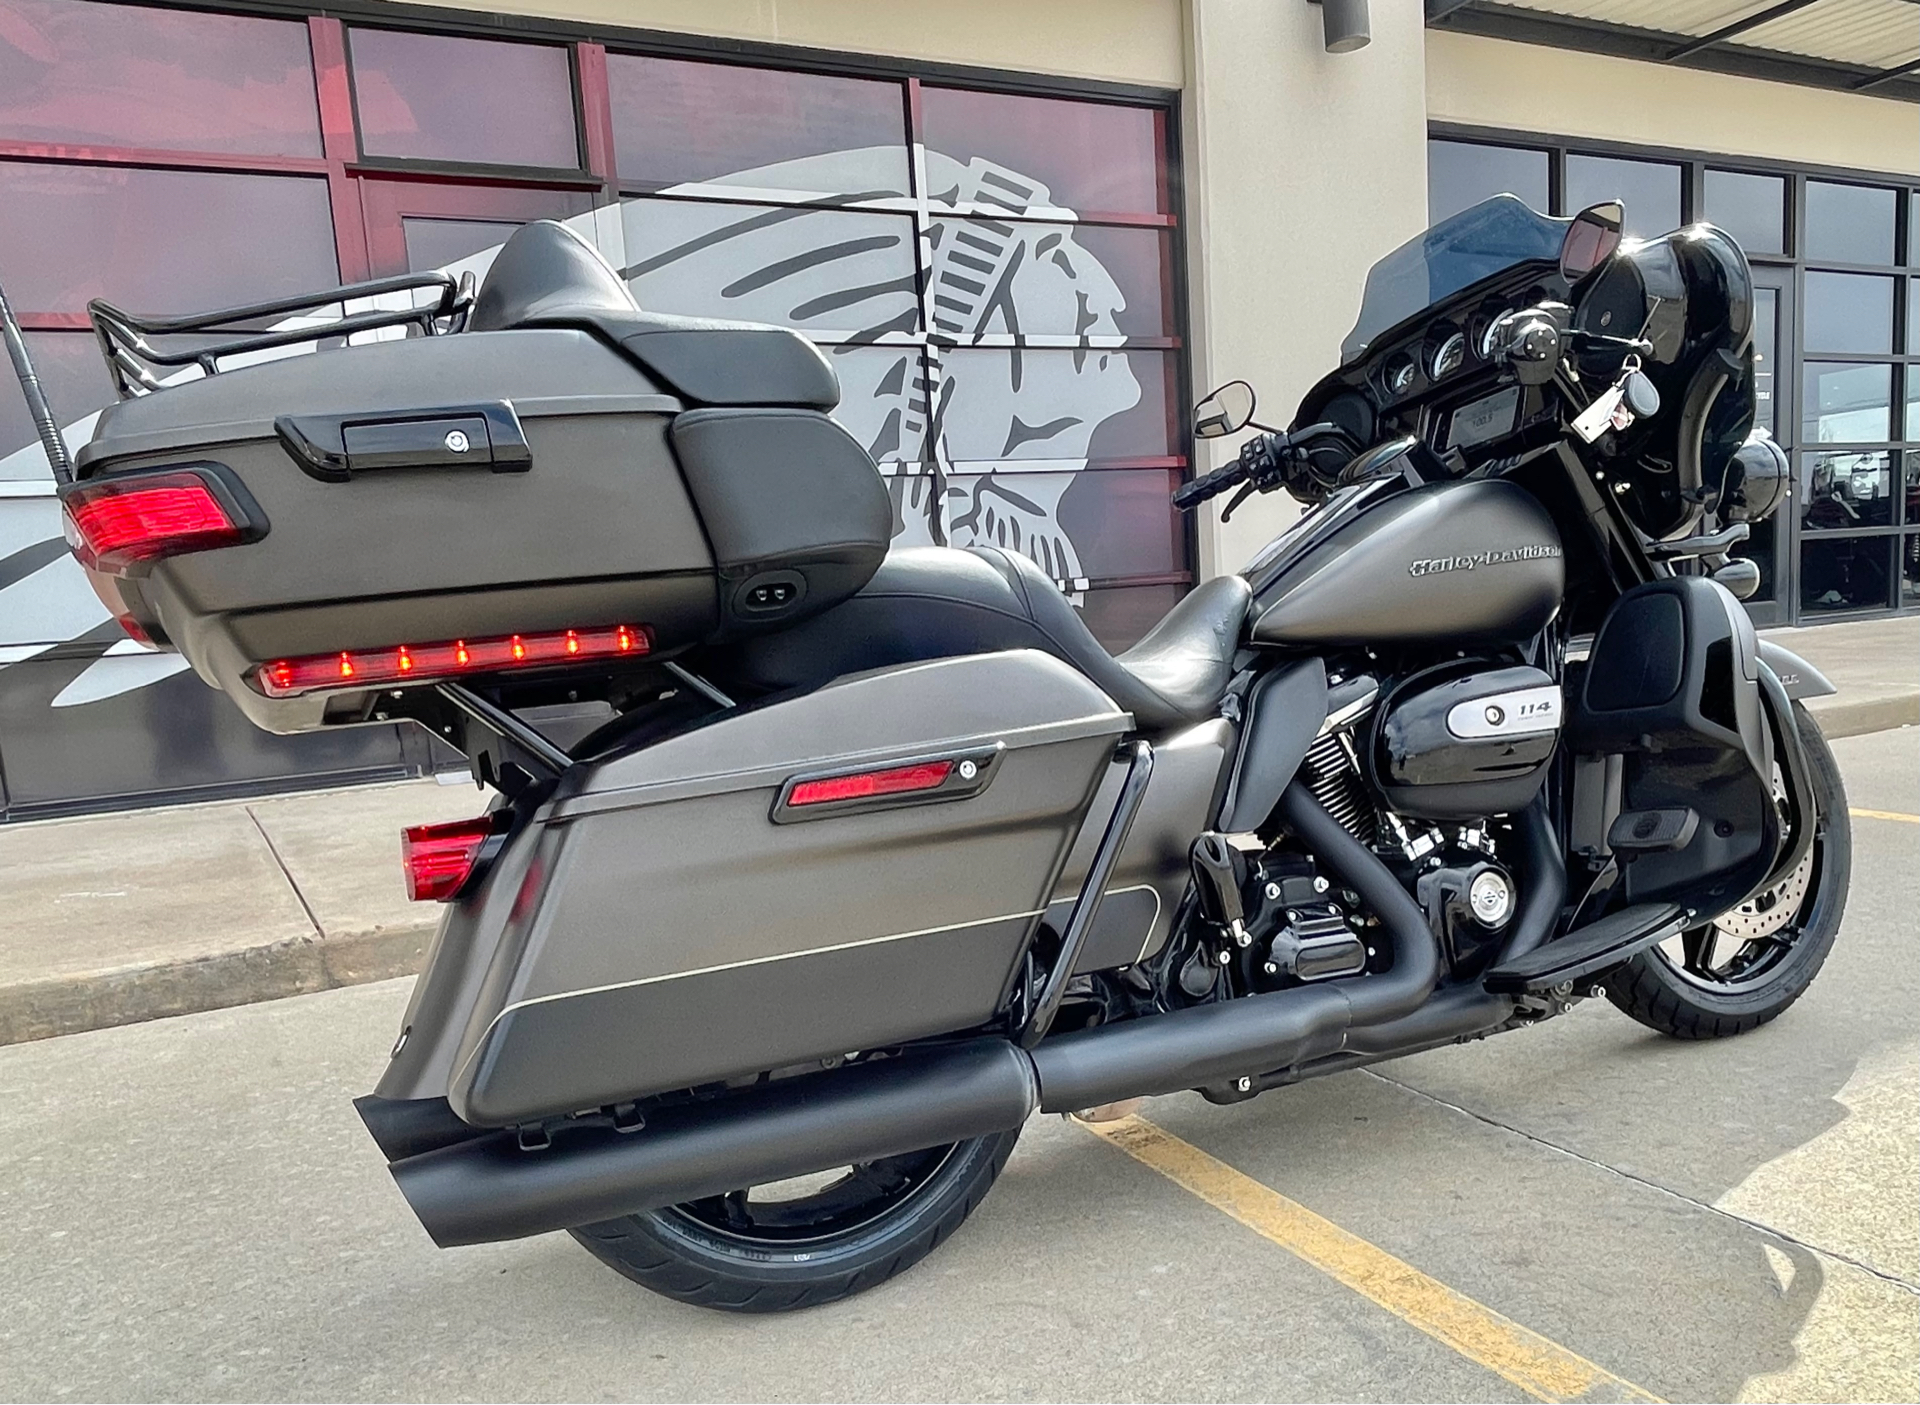 2021 Harley-Davidson Ultra Limited in Norman, Oklahoma - Photo 8